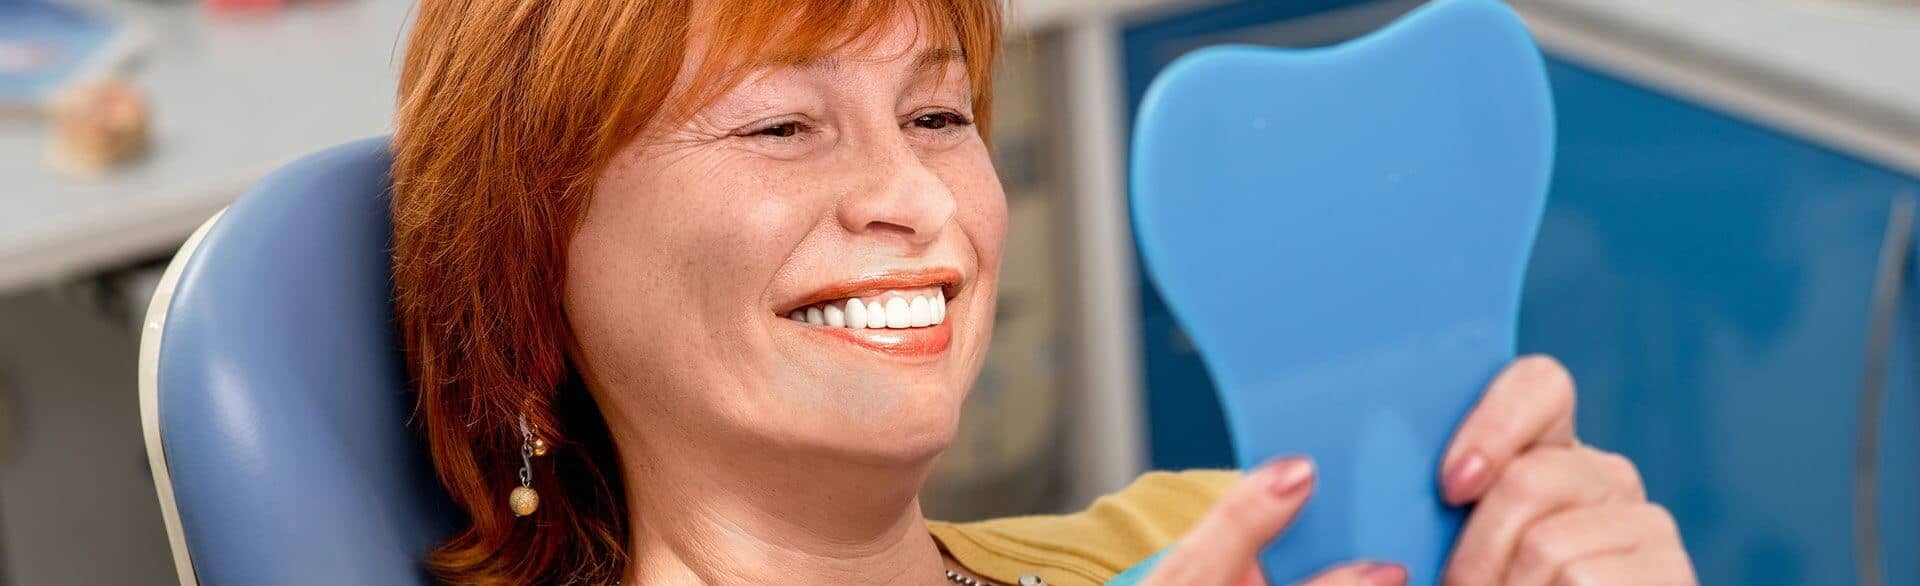 Implant Restorations - Amber Hills Dental Henderson, NV